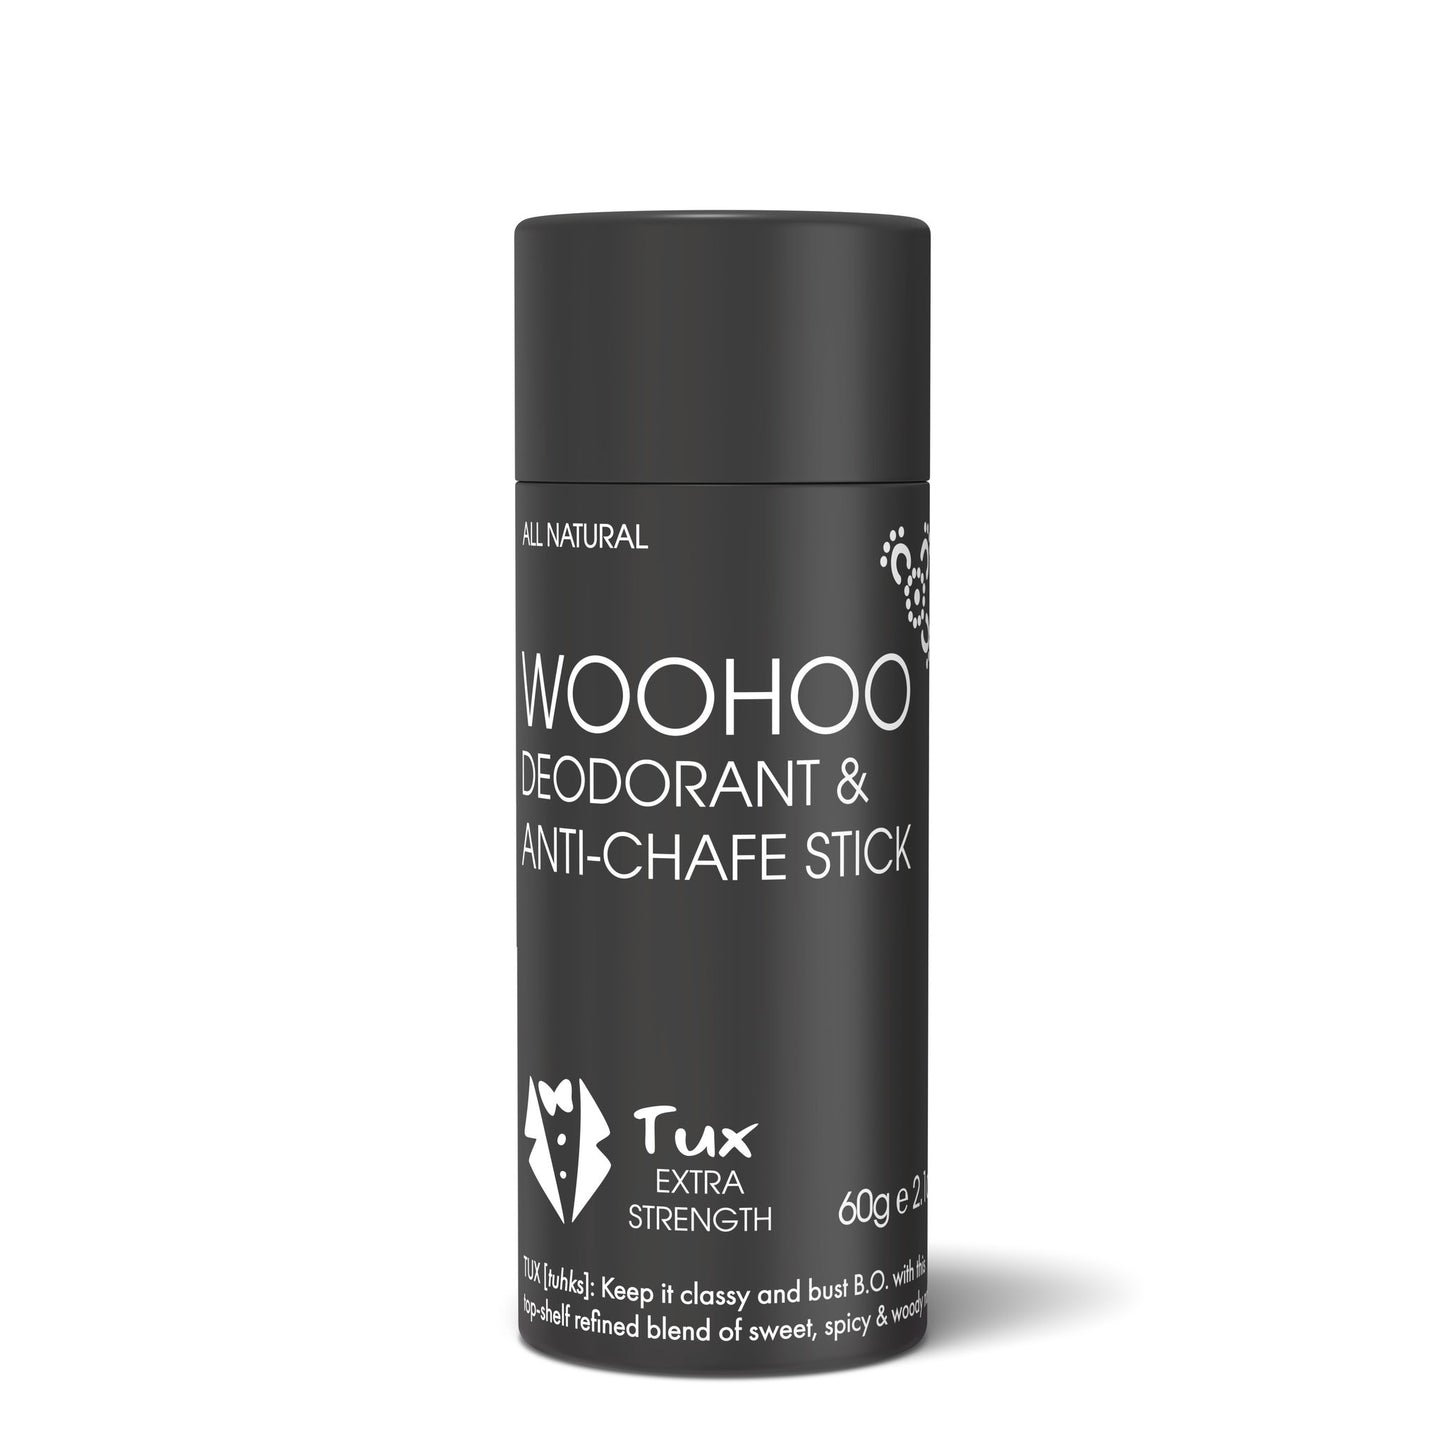 Woohoo Body Deodorant & Anti-Chafe Stick - Tux